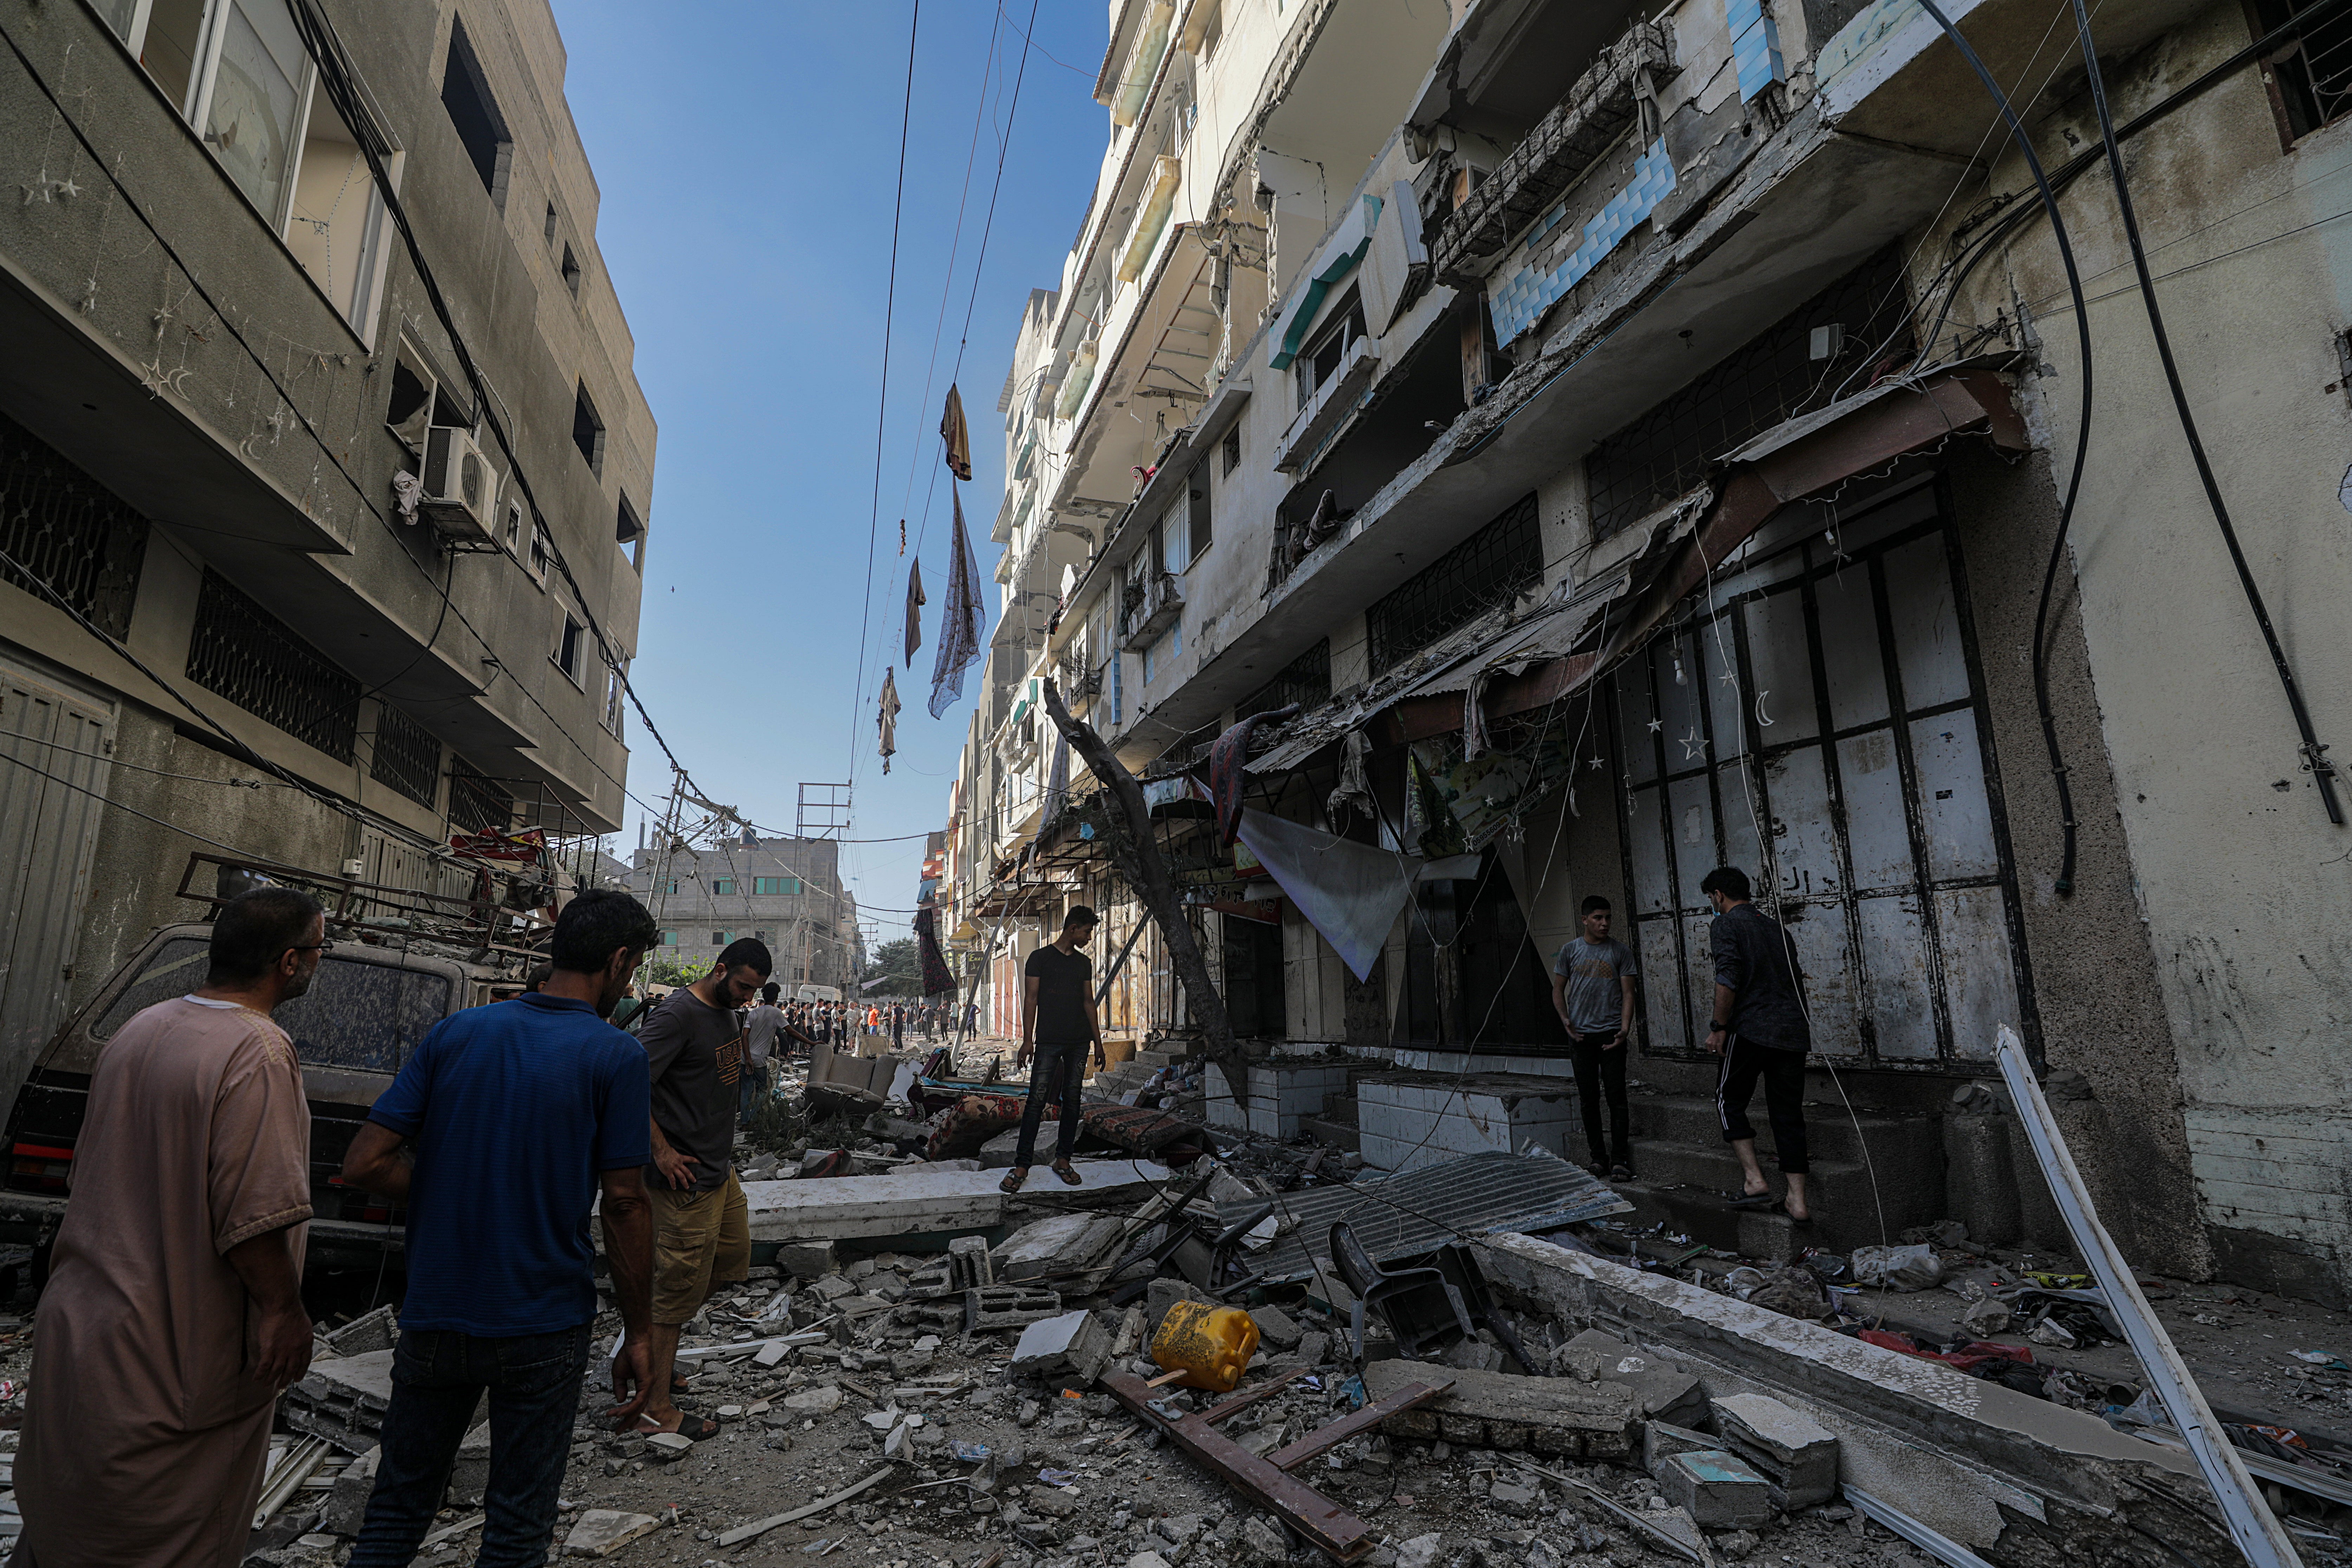 Locals surveyed the destruction following Israeli air strikes in the Al Zaitun neighbourhood of Gaza City on Monday